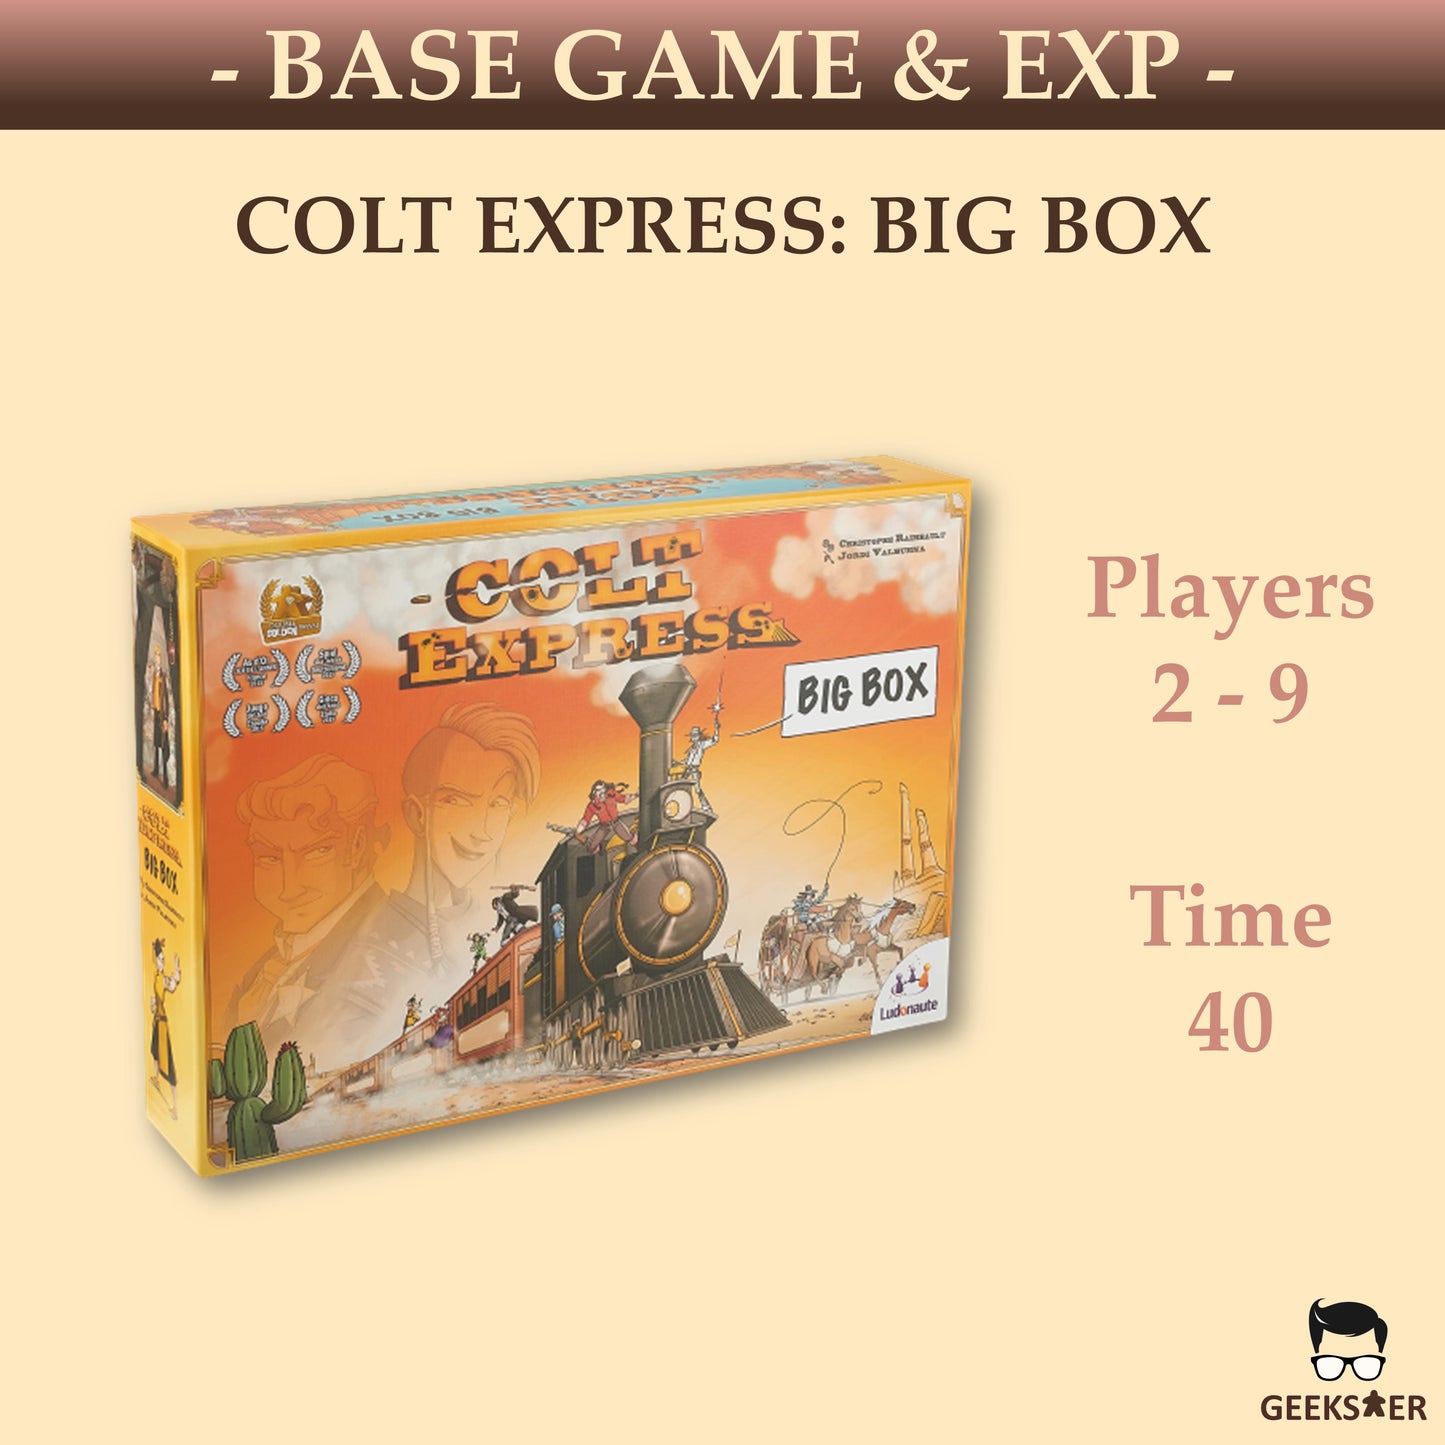  Colt Express BIG BOX Board Game - Base Game